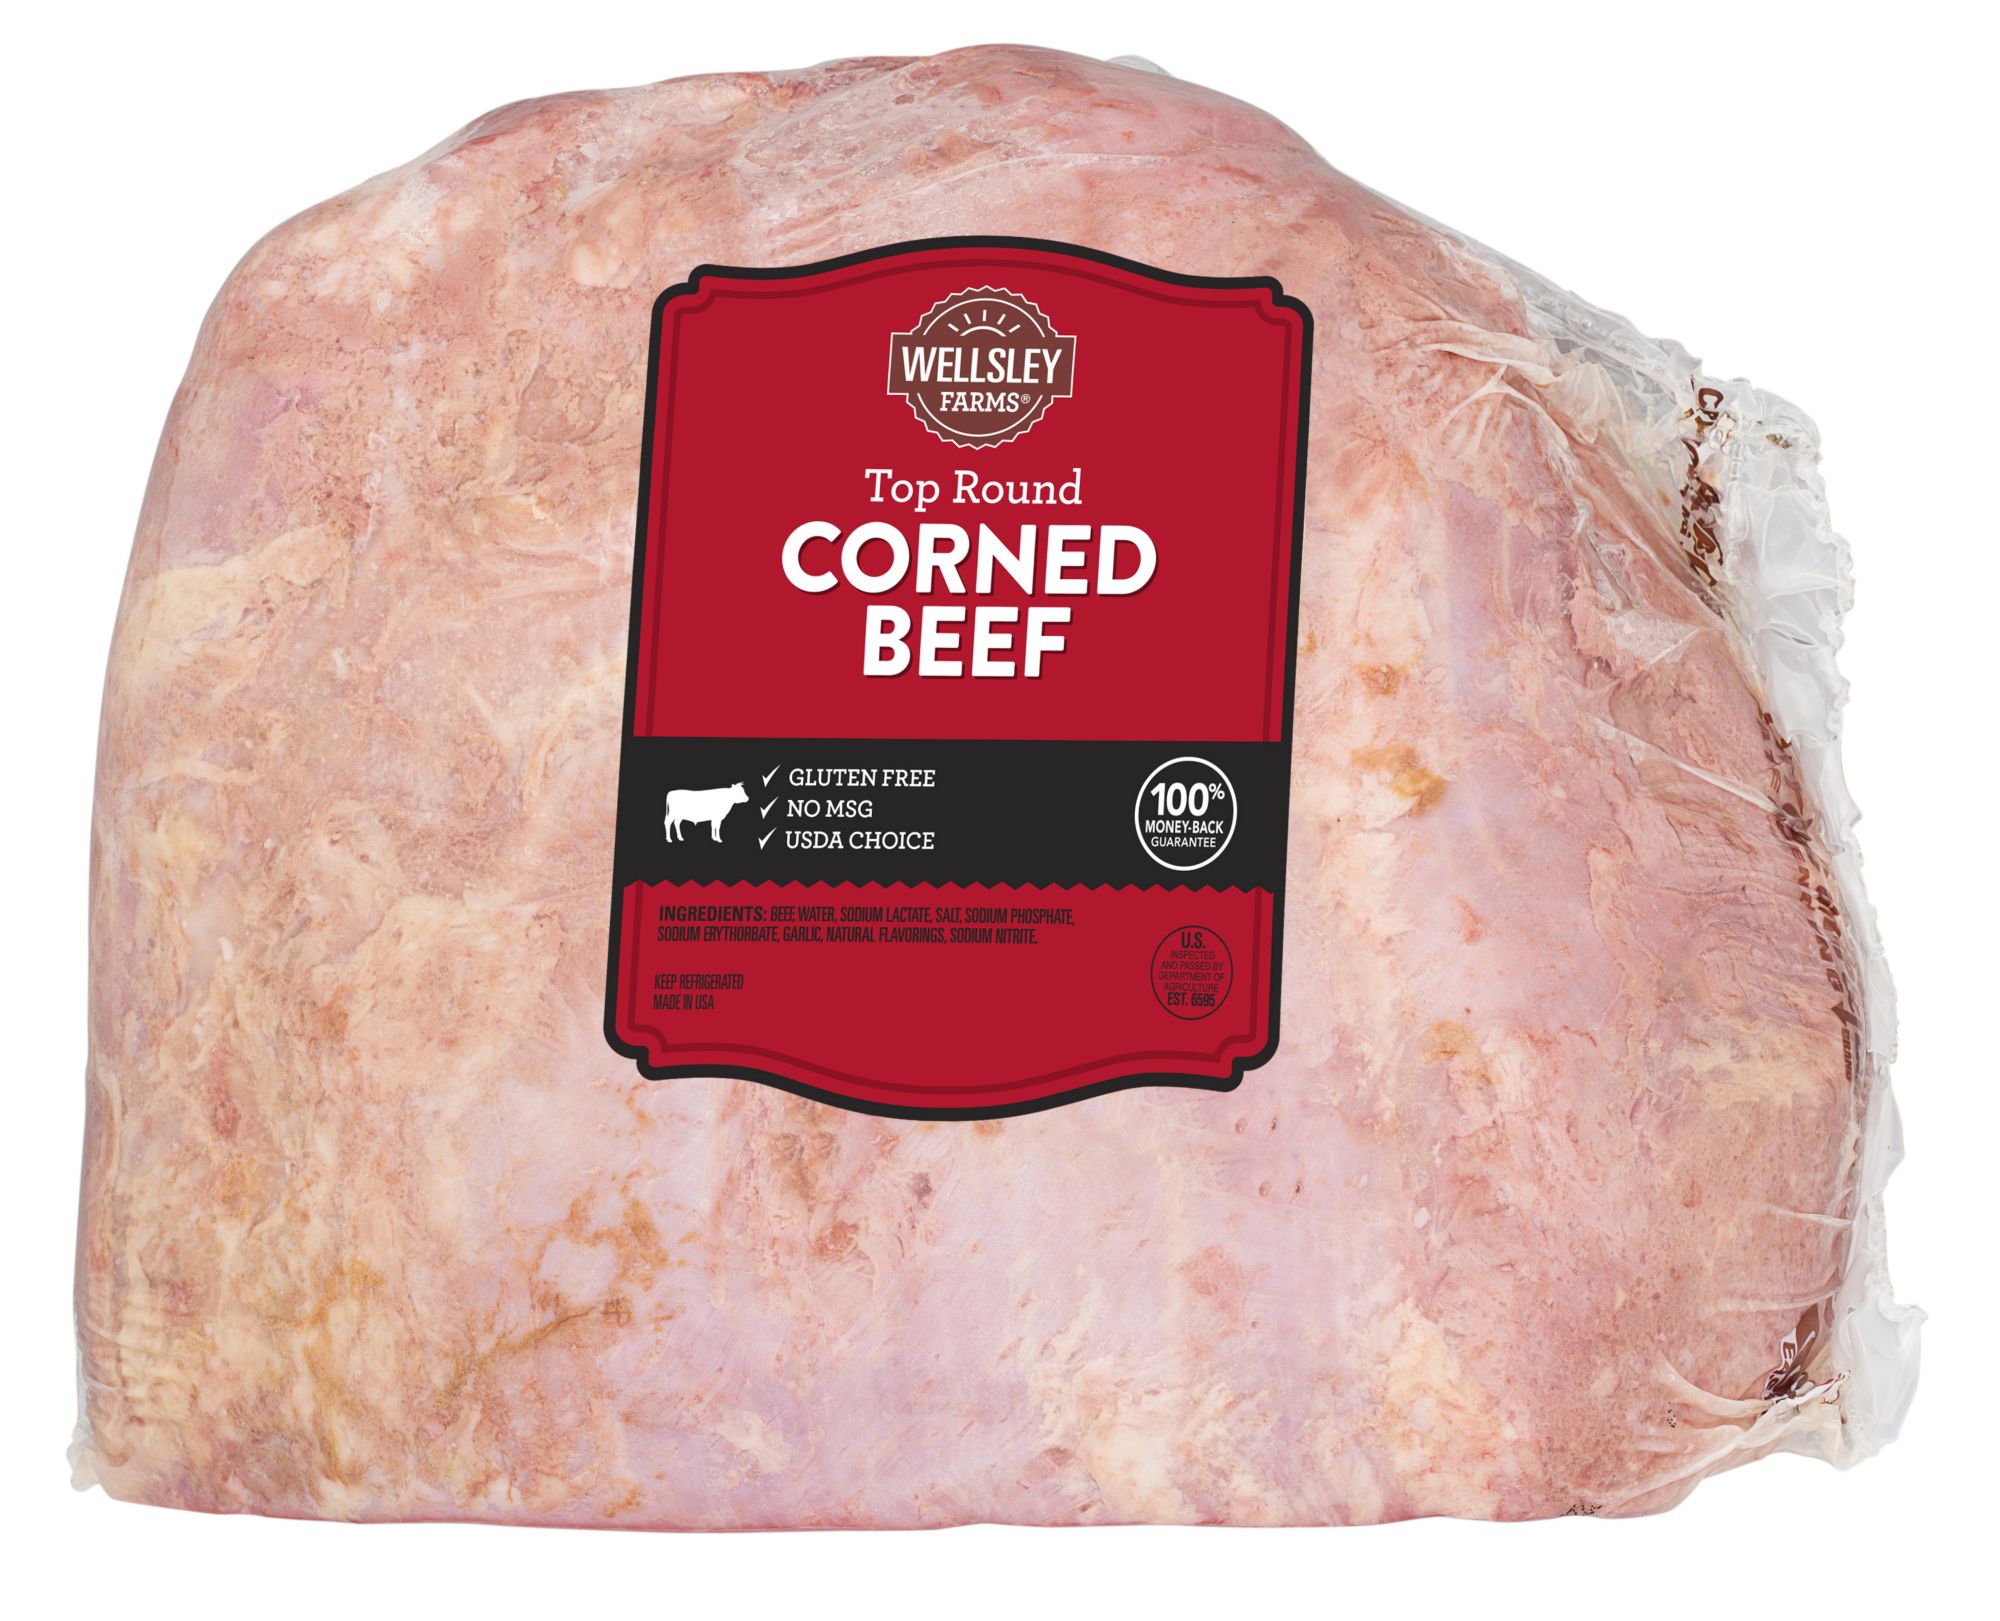 Top-Round Corned Beef, 0.75-1.5 lb Standard Cut